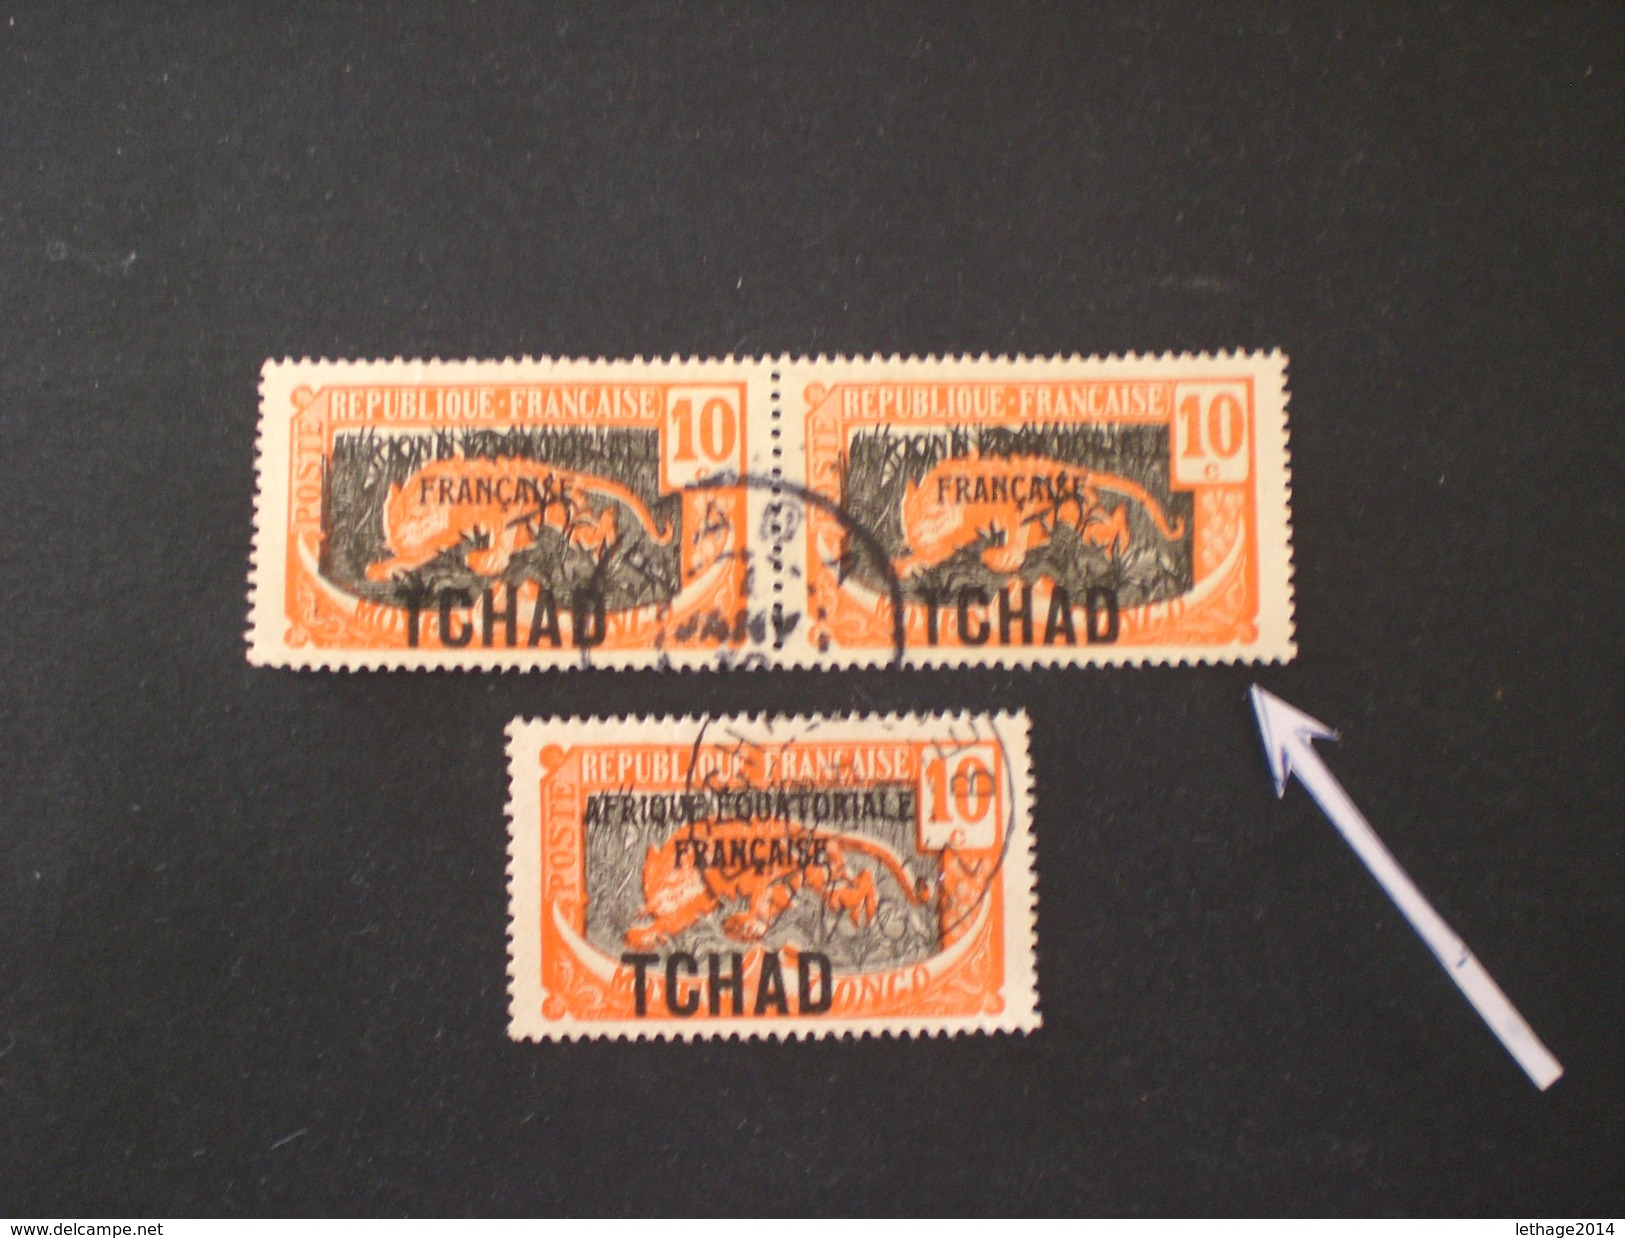 TCHAD CHAD 1925 Panthere Overprinted "AFRIQUE EQUATORIALE FRANCAISE" Color Error Is Not Gray But Black - Oblitérés